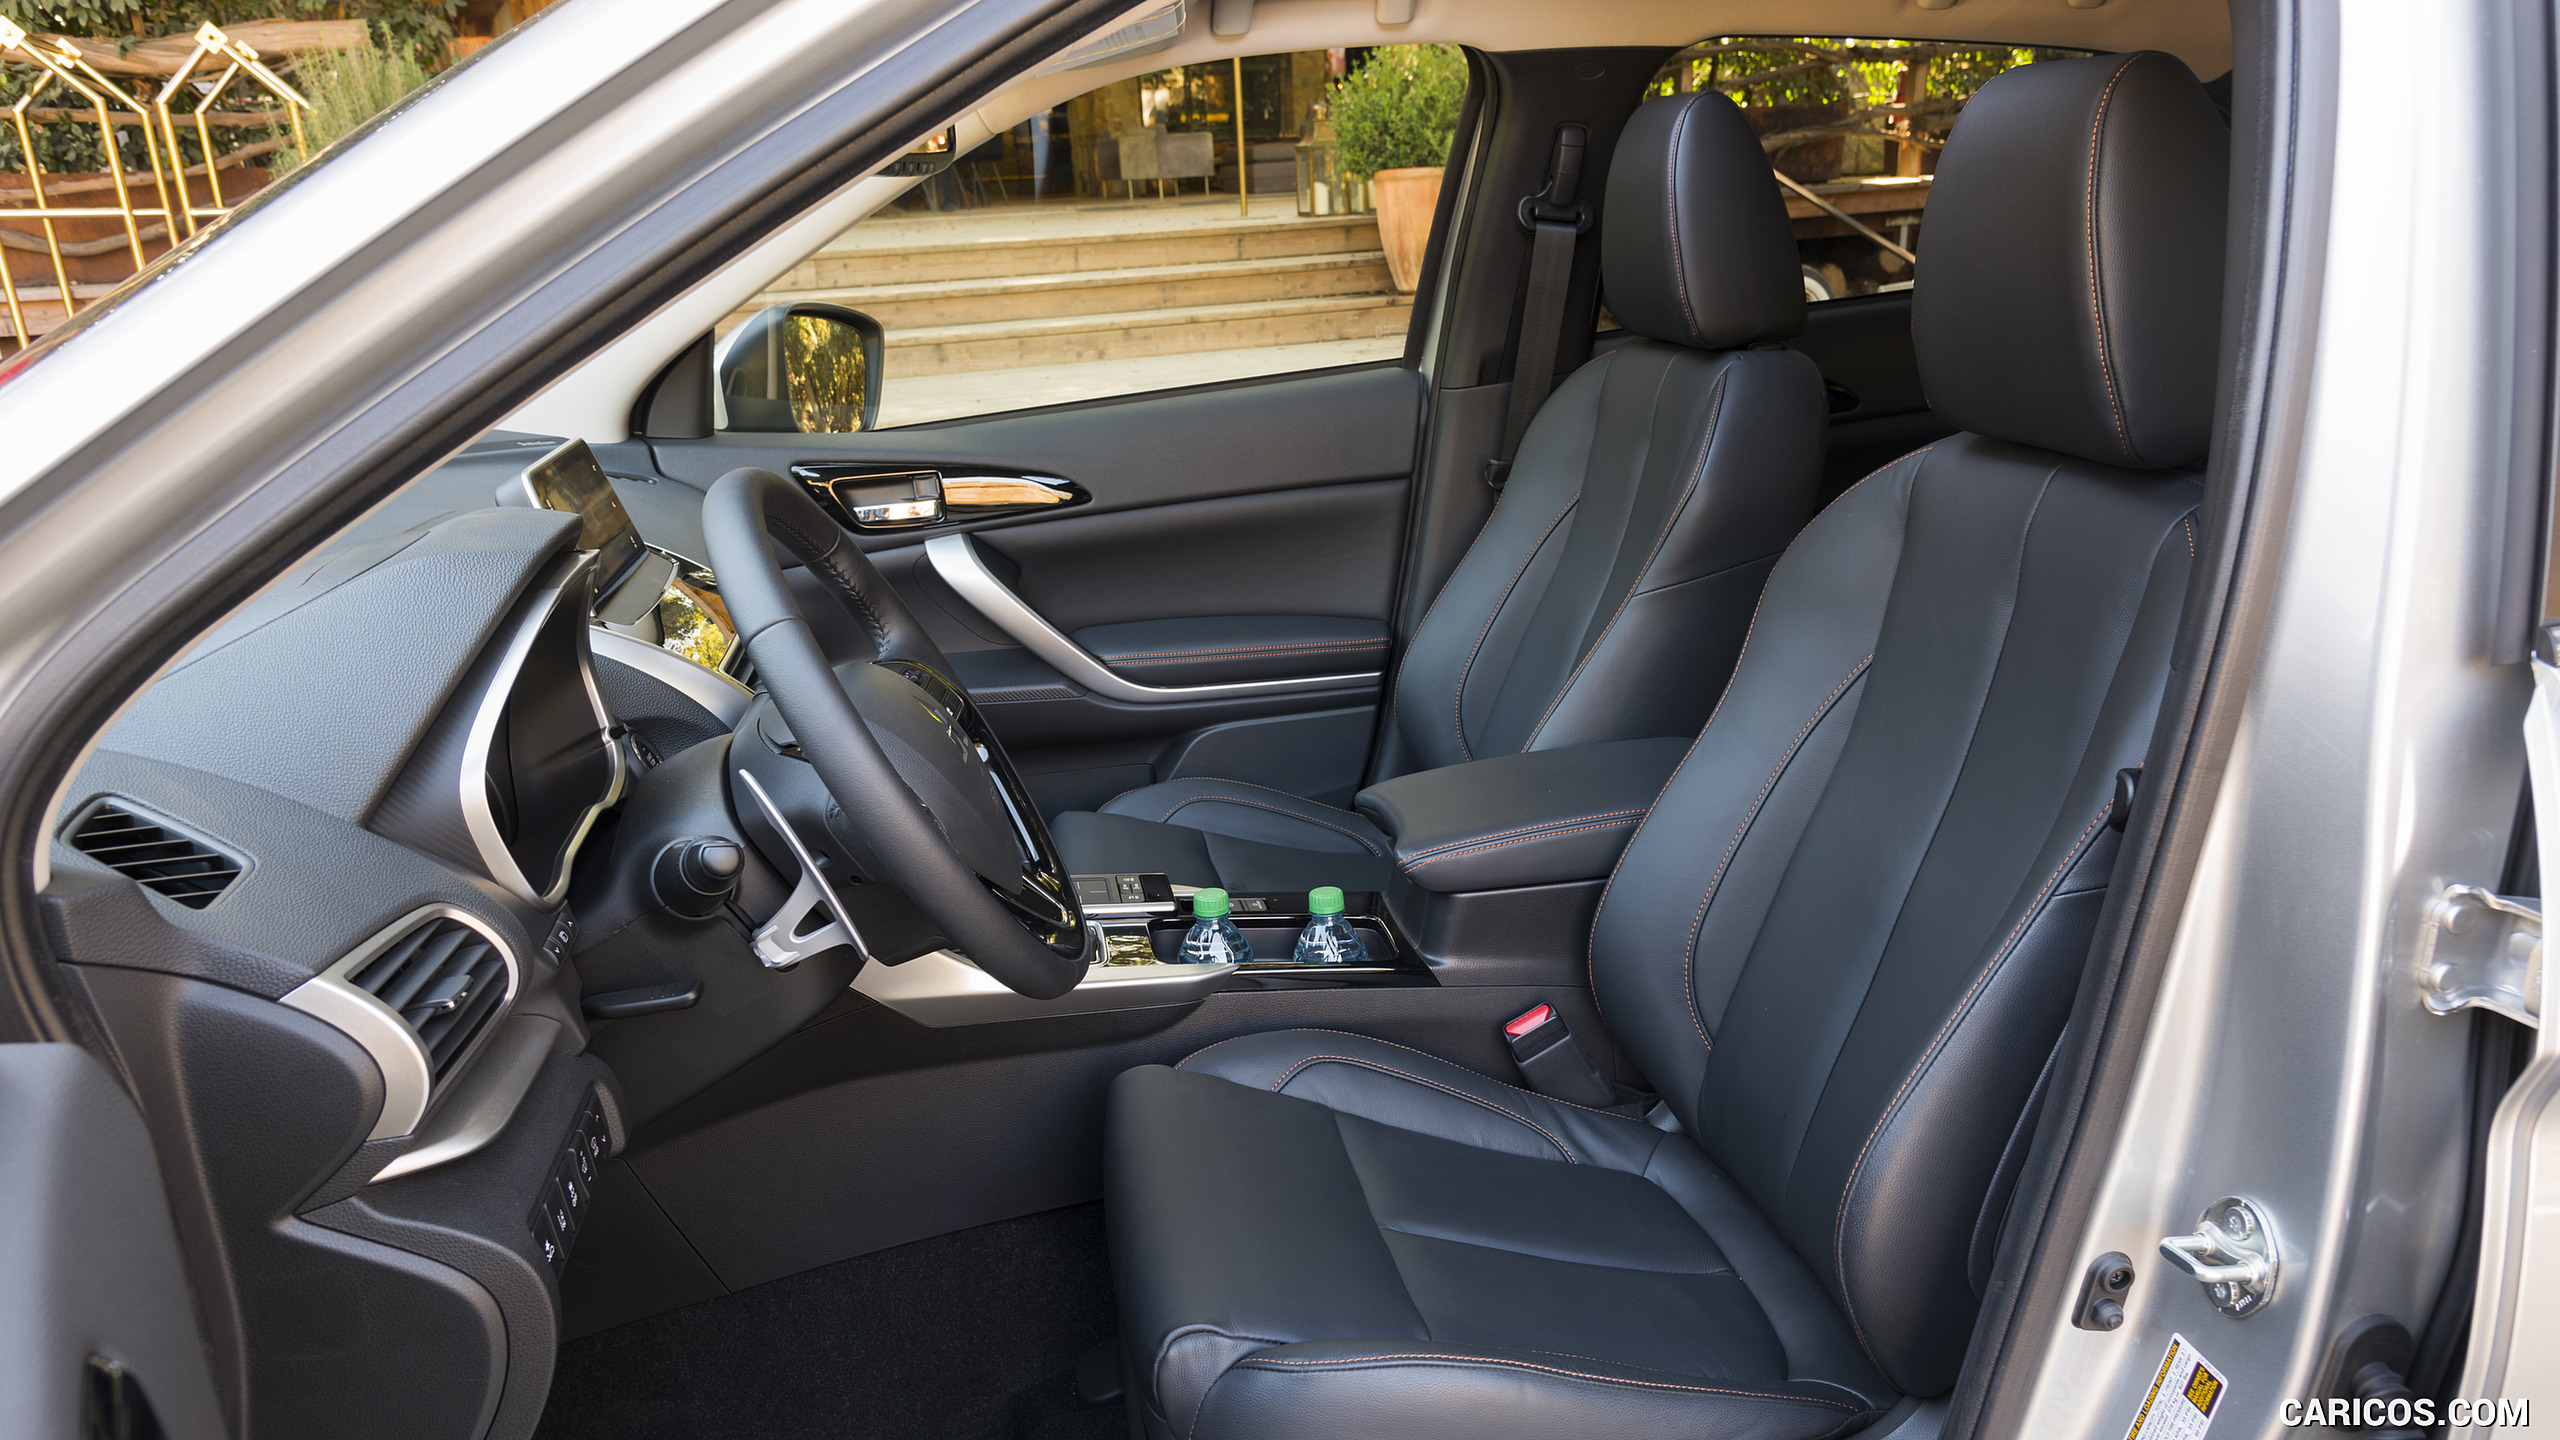 2018 Mitsubishi Eclipse Cross - Interior, Front Seats, #172 of 173